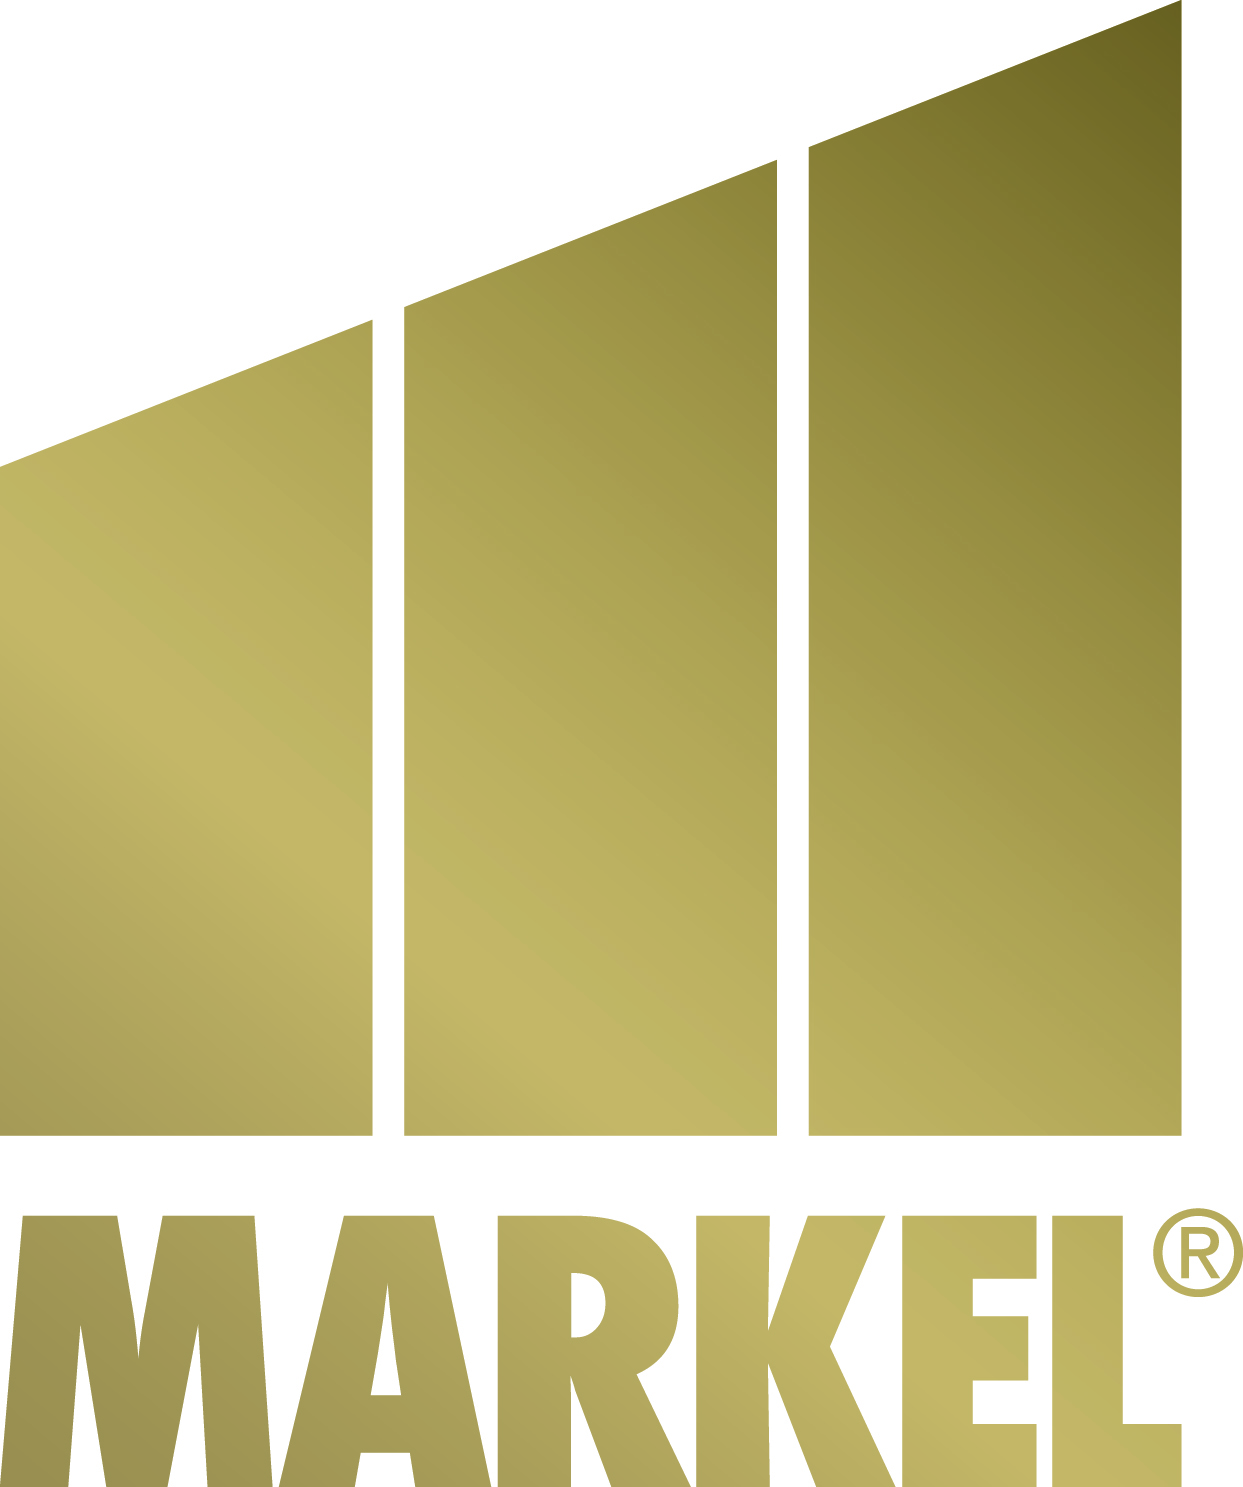 4. Markel Corporation (Elite)